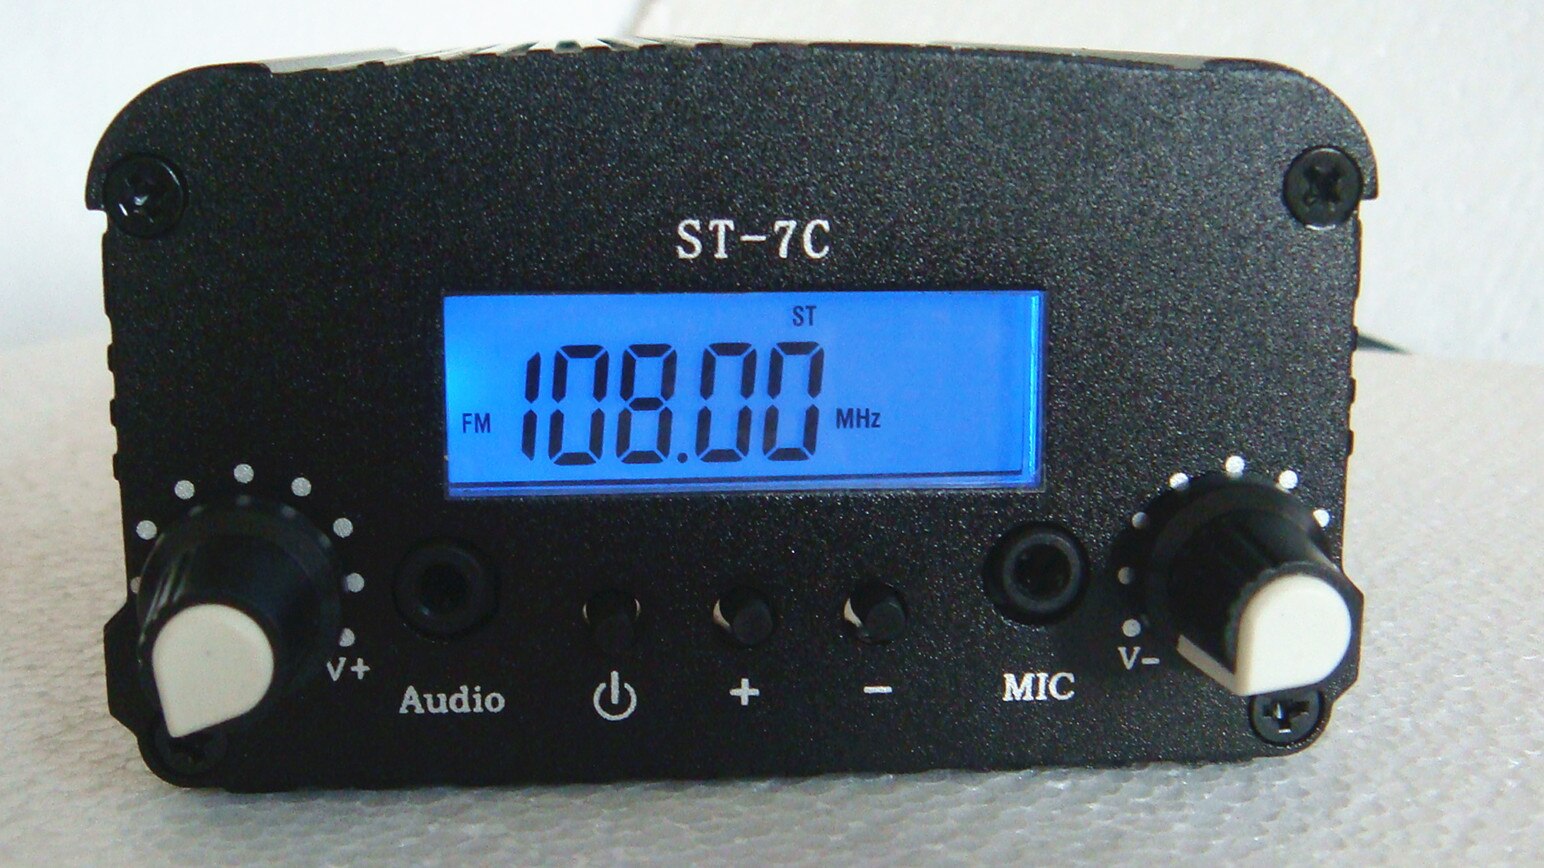 Pll fm radio 1w/7w 76-108 mhz vært + lille antenne bnc st -7c stereo fm radiosender